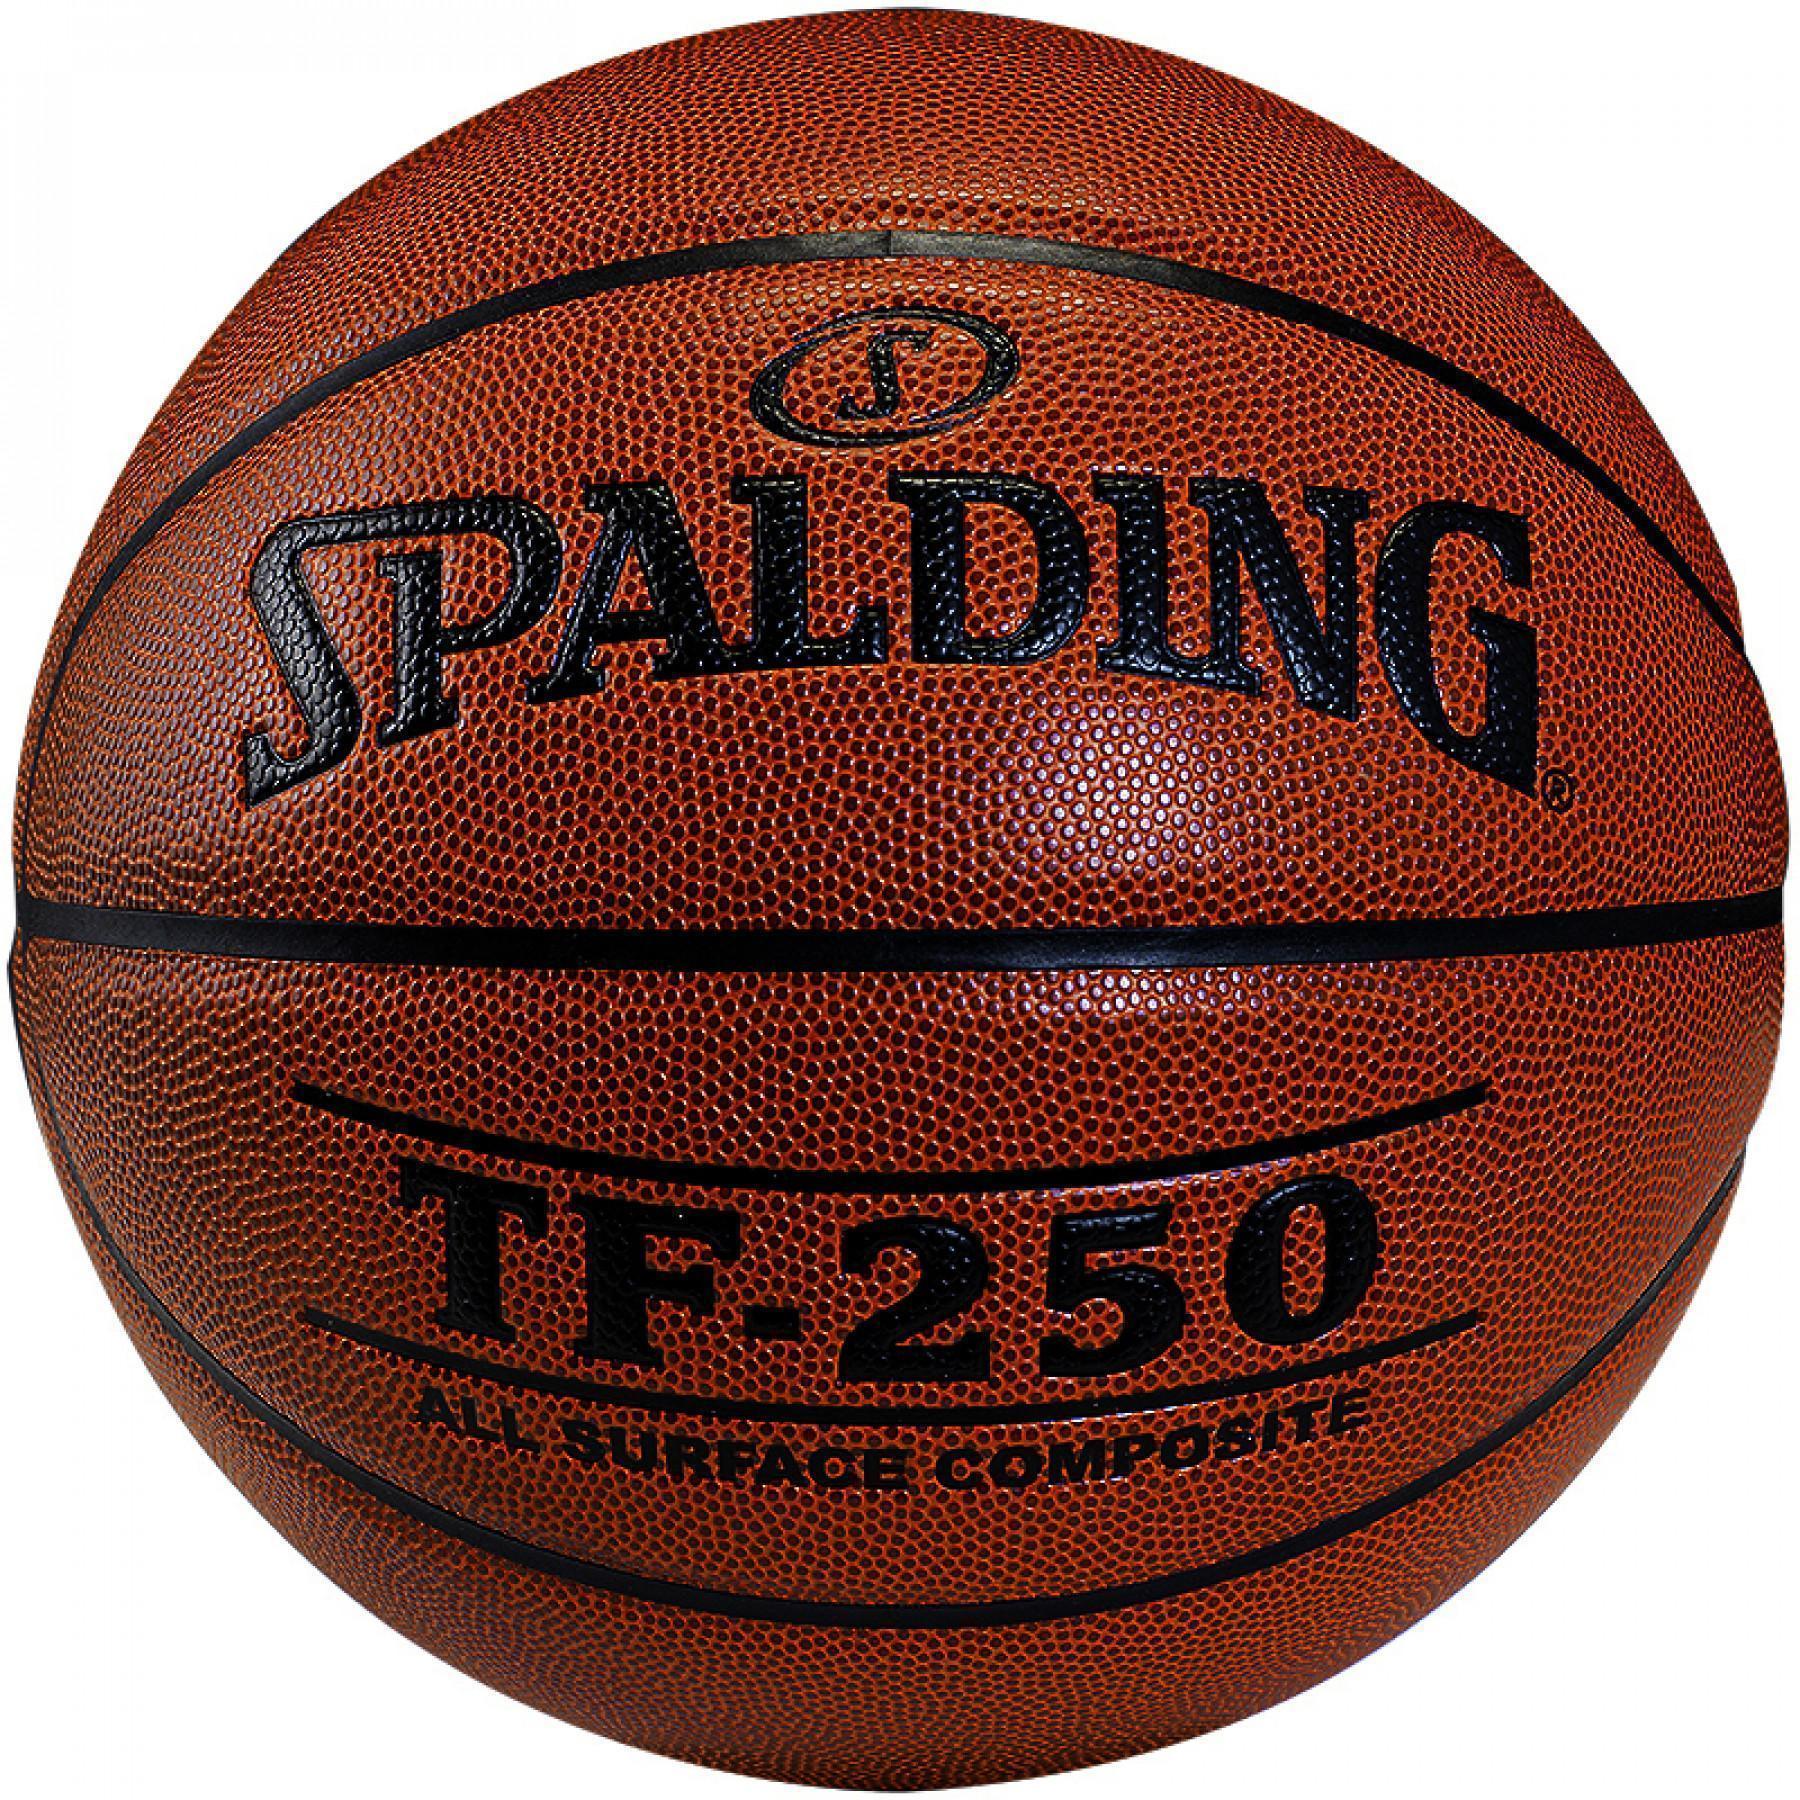 Balon Spalding TF250 indoor/outdoor